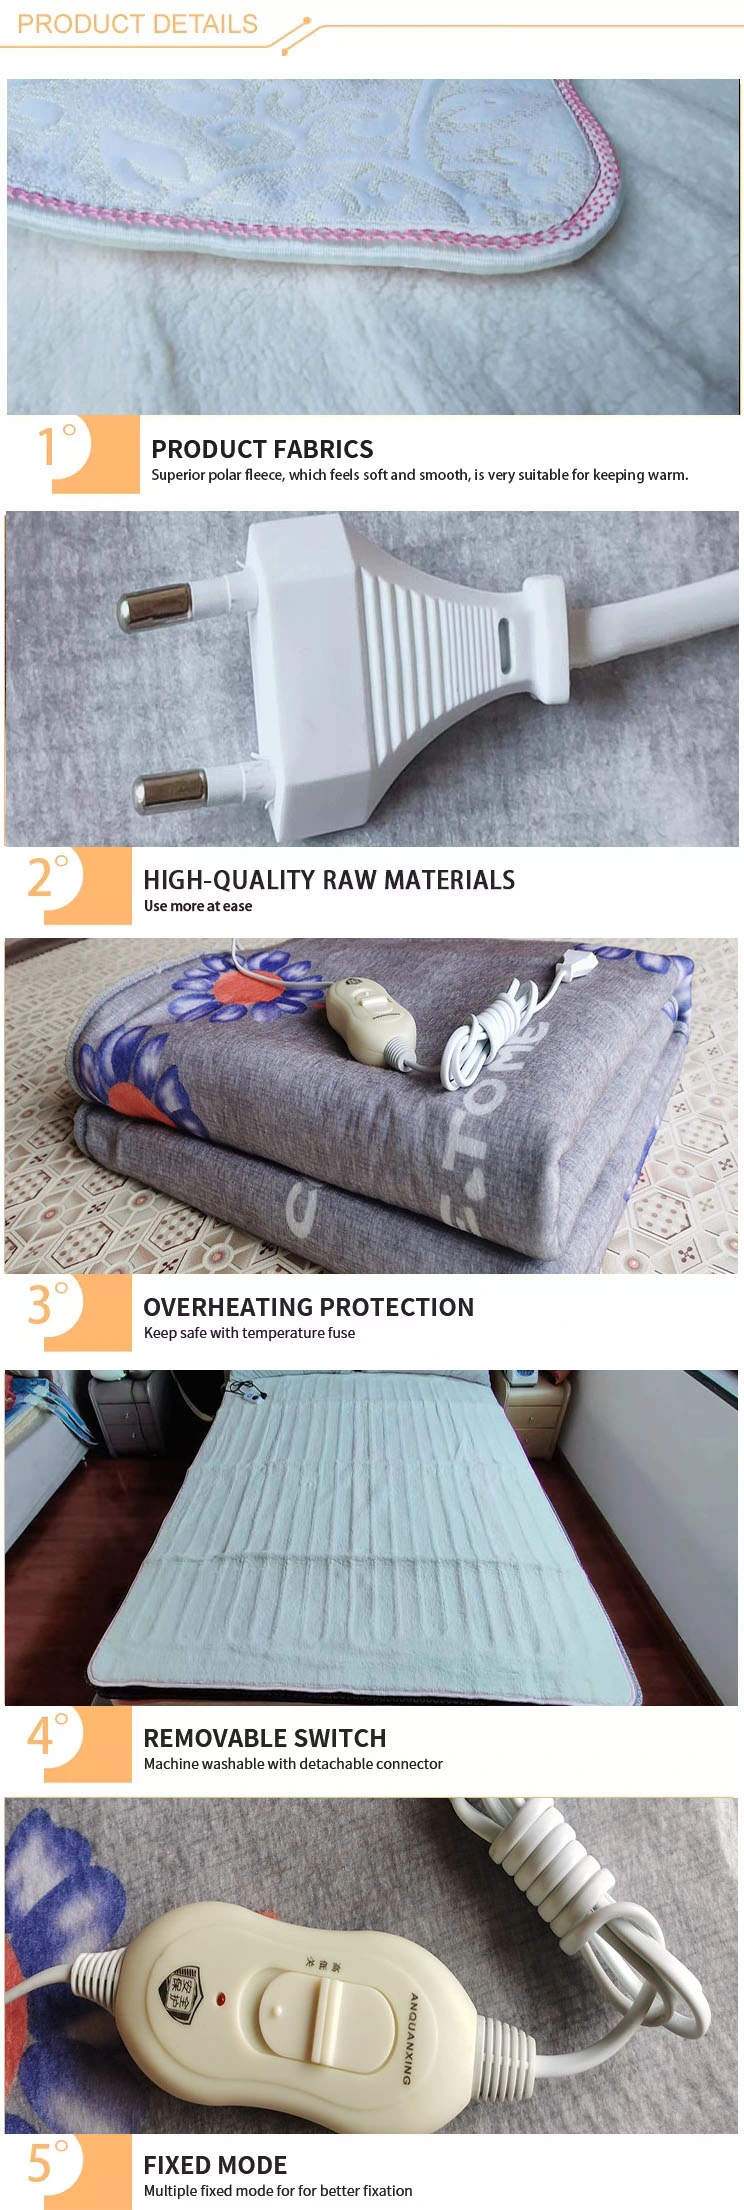 Comforter Bed Flannel Electric Bed Blanket Electric Body Blanket Electric Heating Blanket Electric Bed Heater